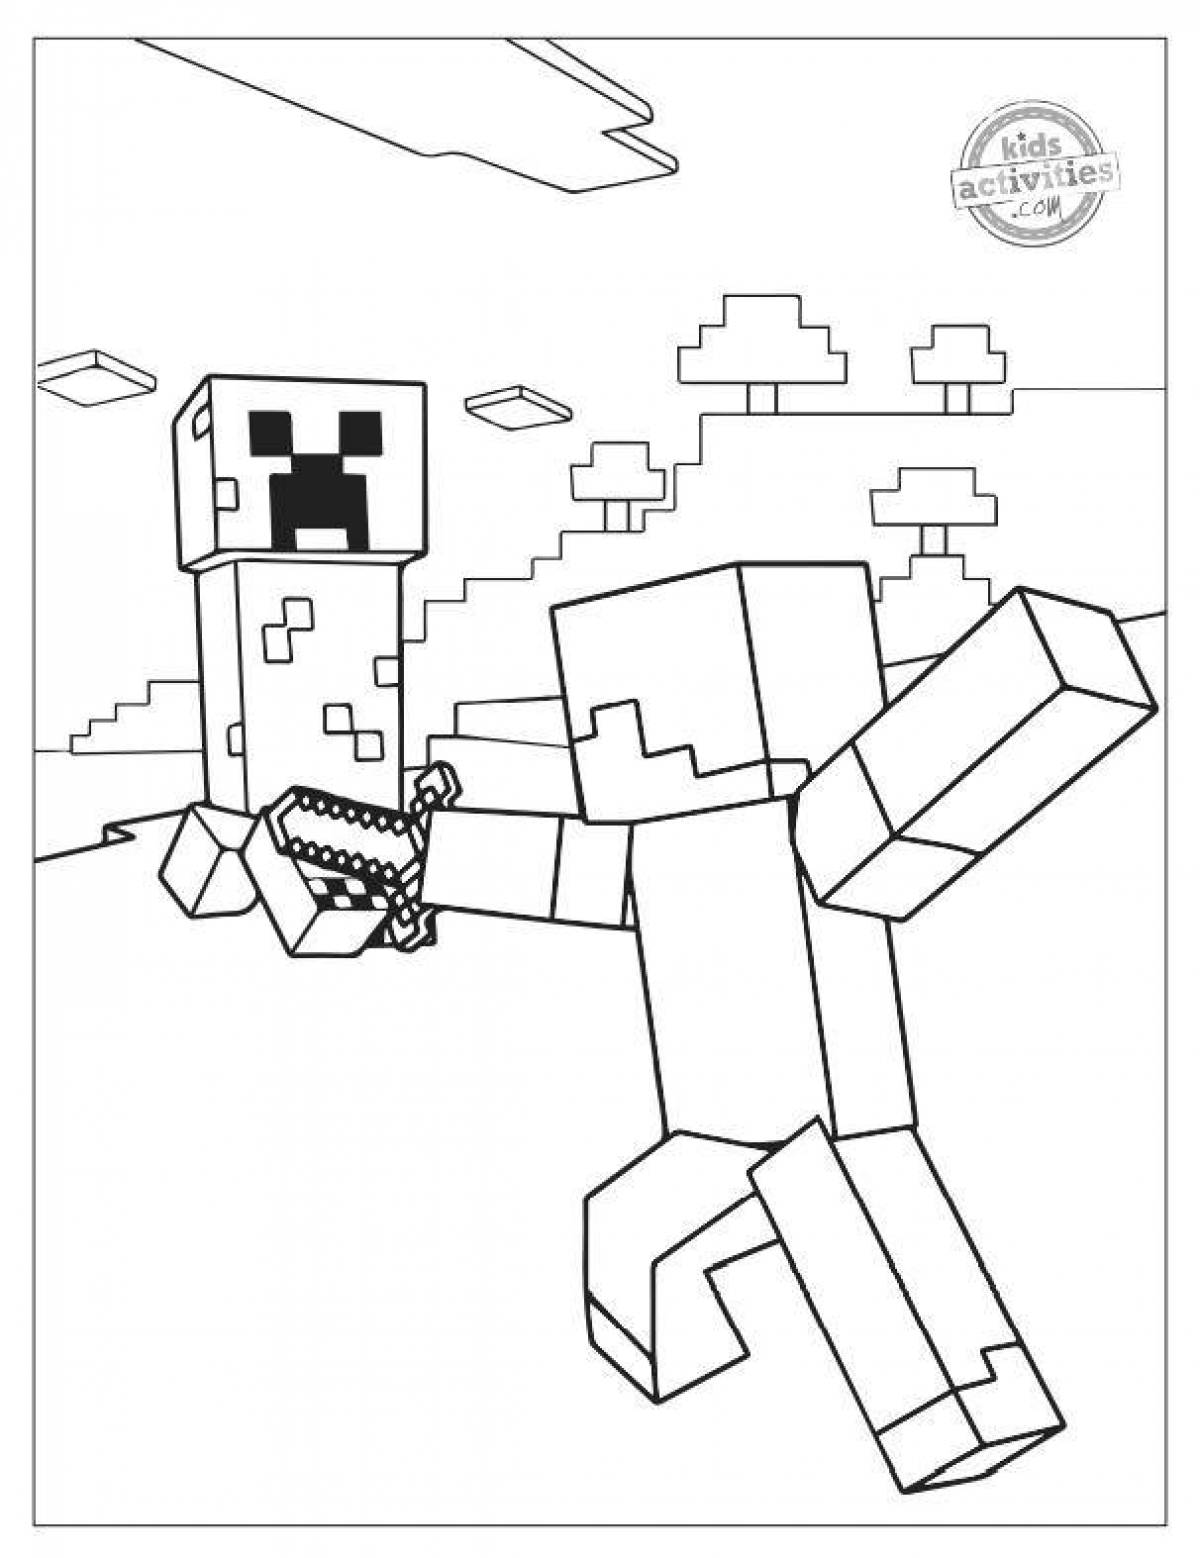 Joyful minecraft cat coloring page